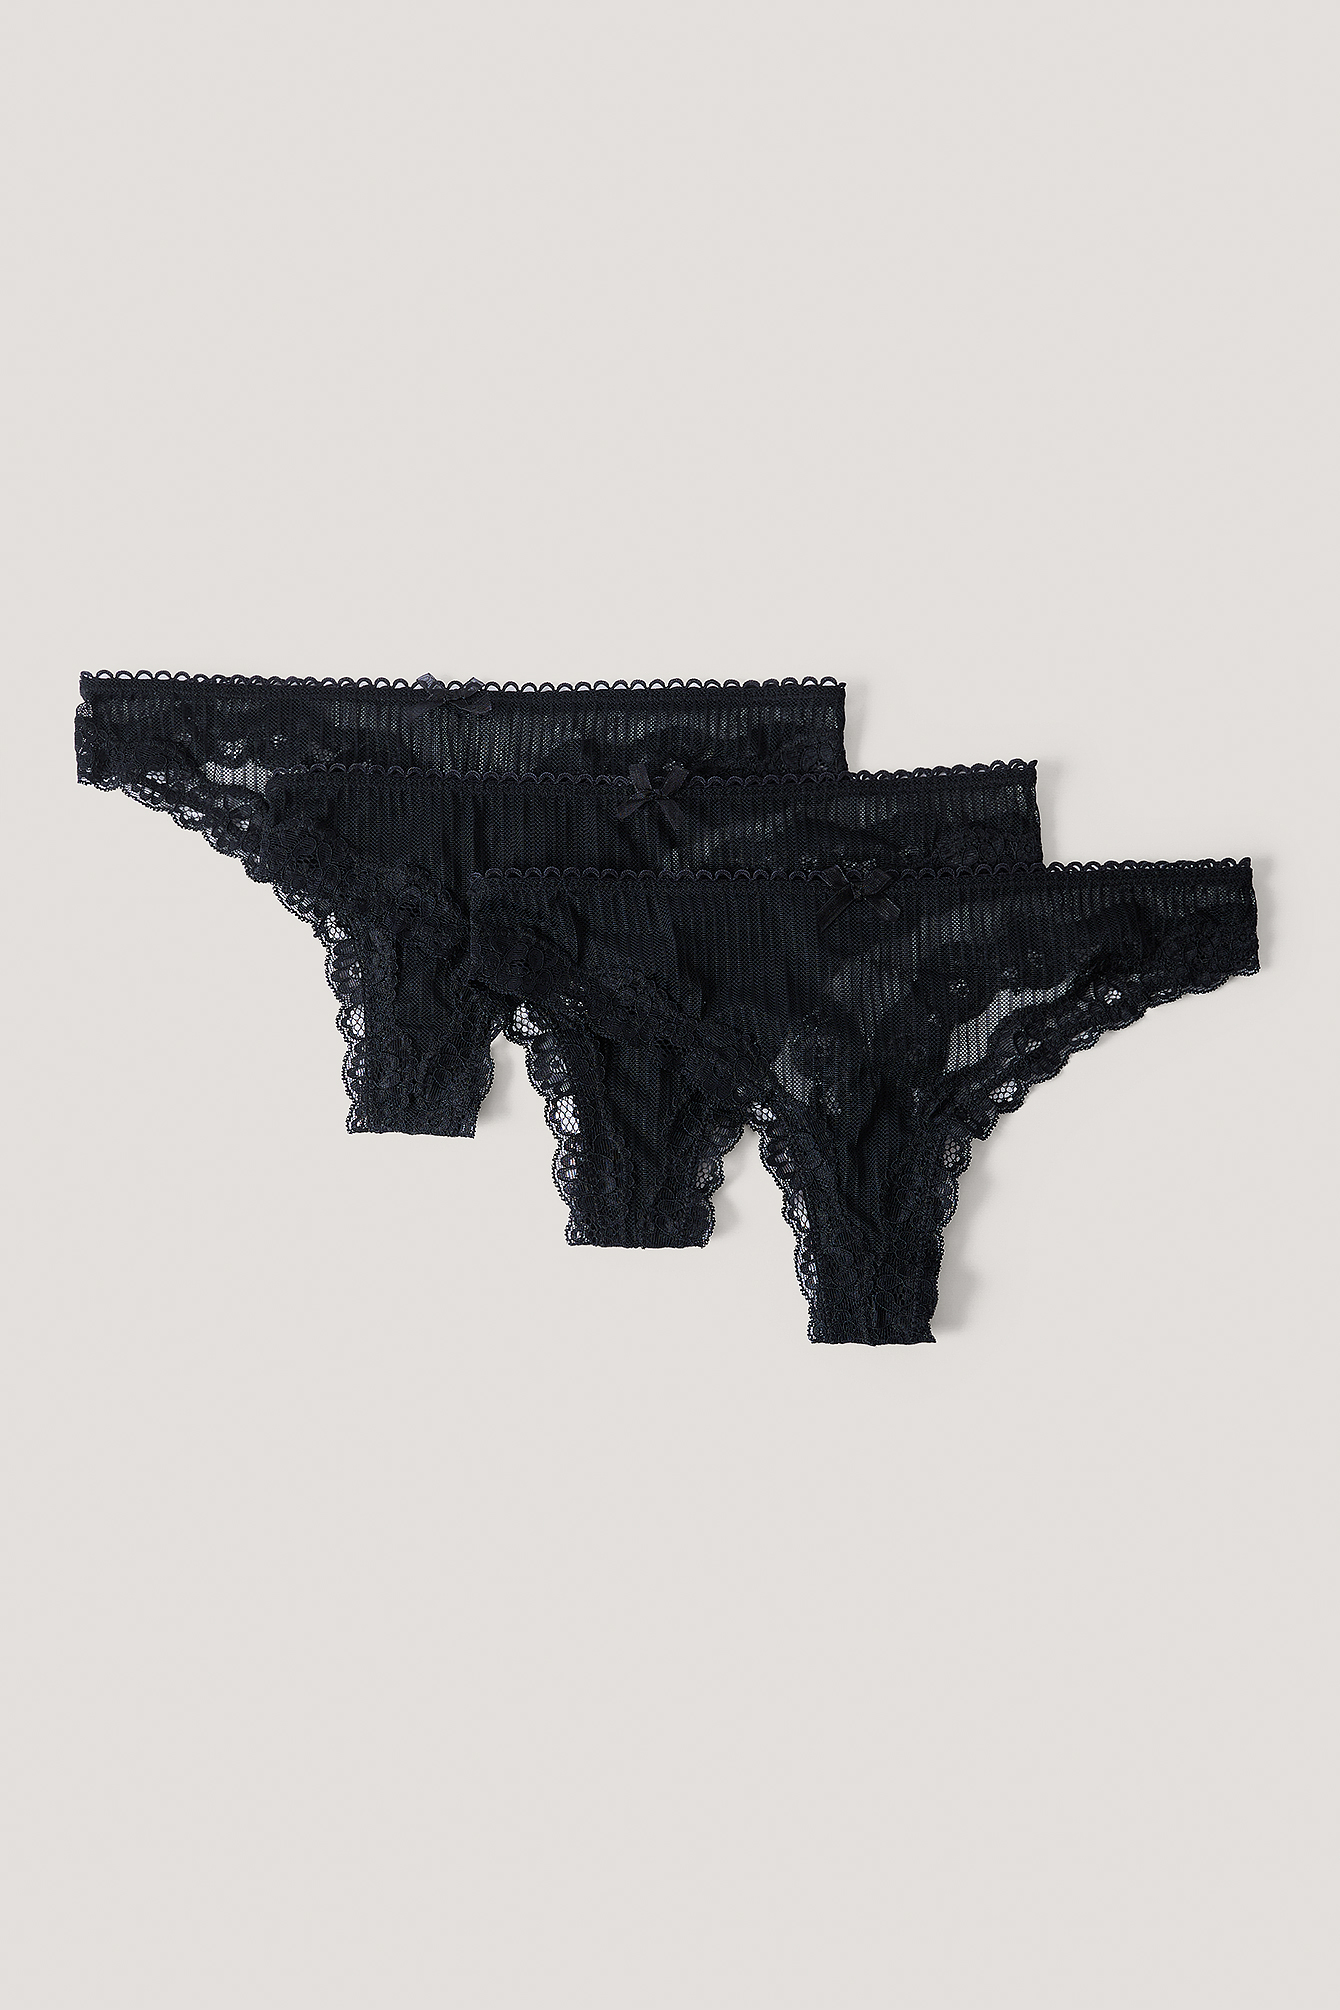 Black Lace Basic Thong 3-pack